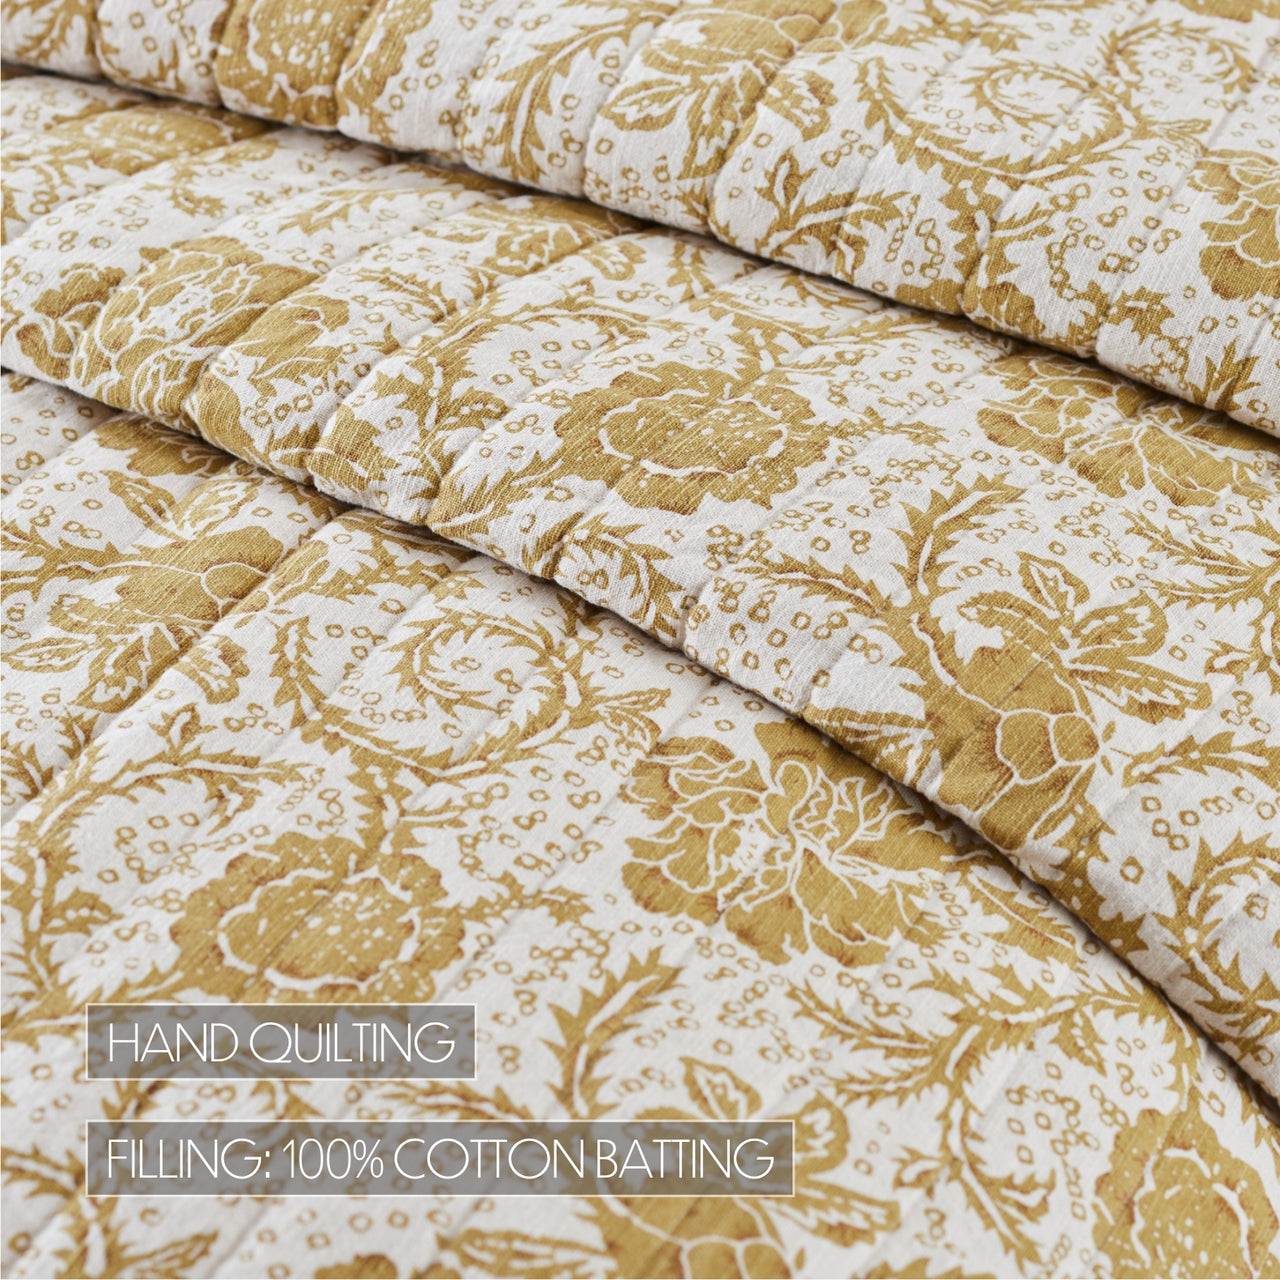 Dorset Gold Floral King Quilt 105Wx95L VHC Brands